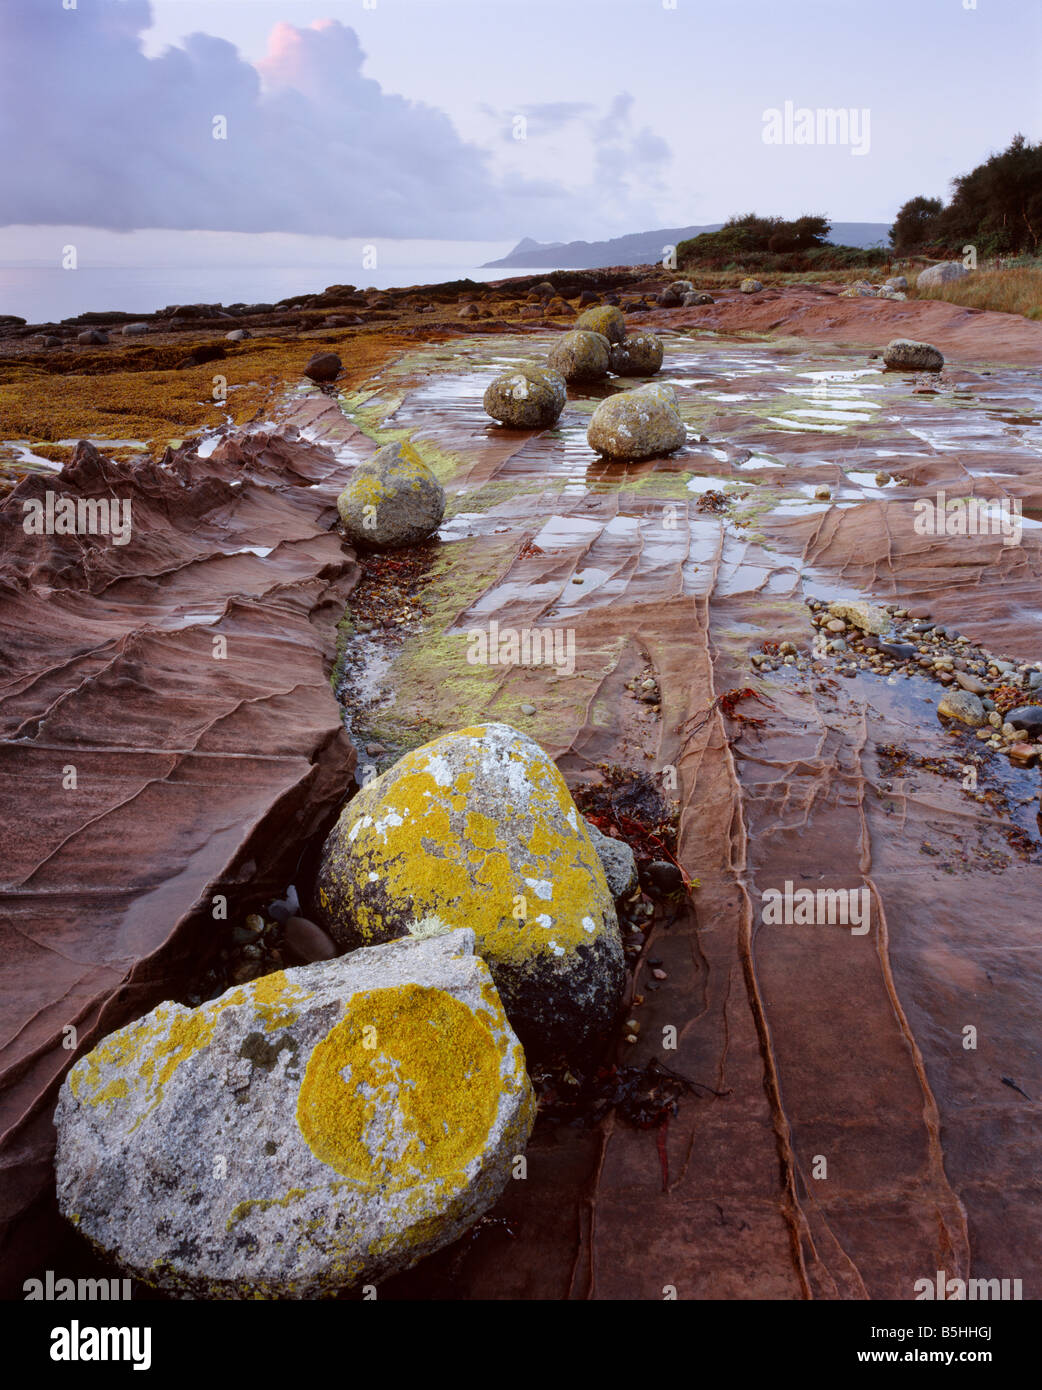 Glacial erratic boulders on sandstone bedrock Pirate's Cove near Corrie, Isle of Arran, North Aryshire, Scotland, UK. Stock Photo